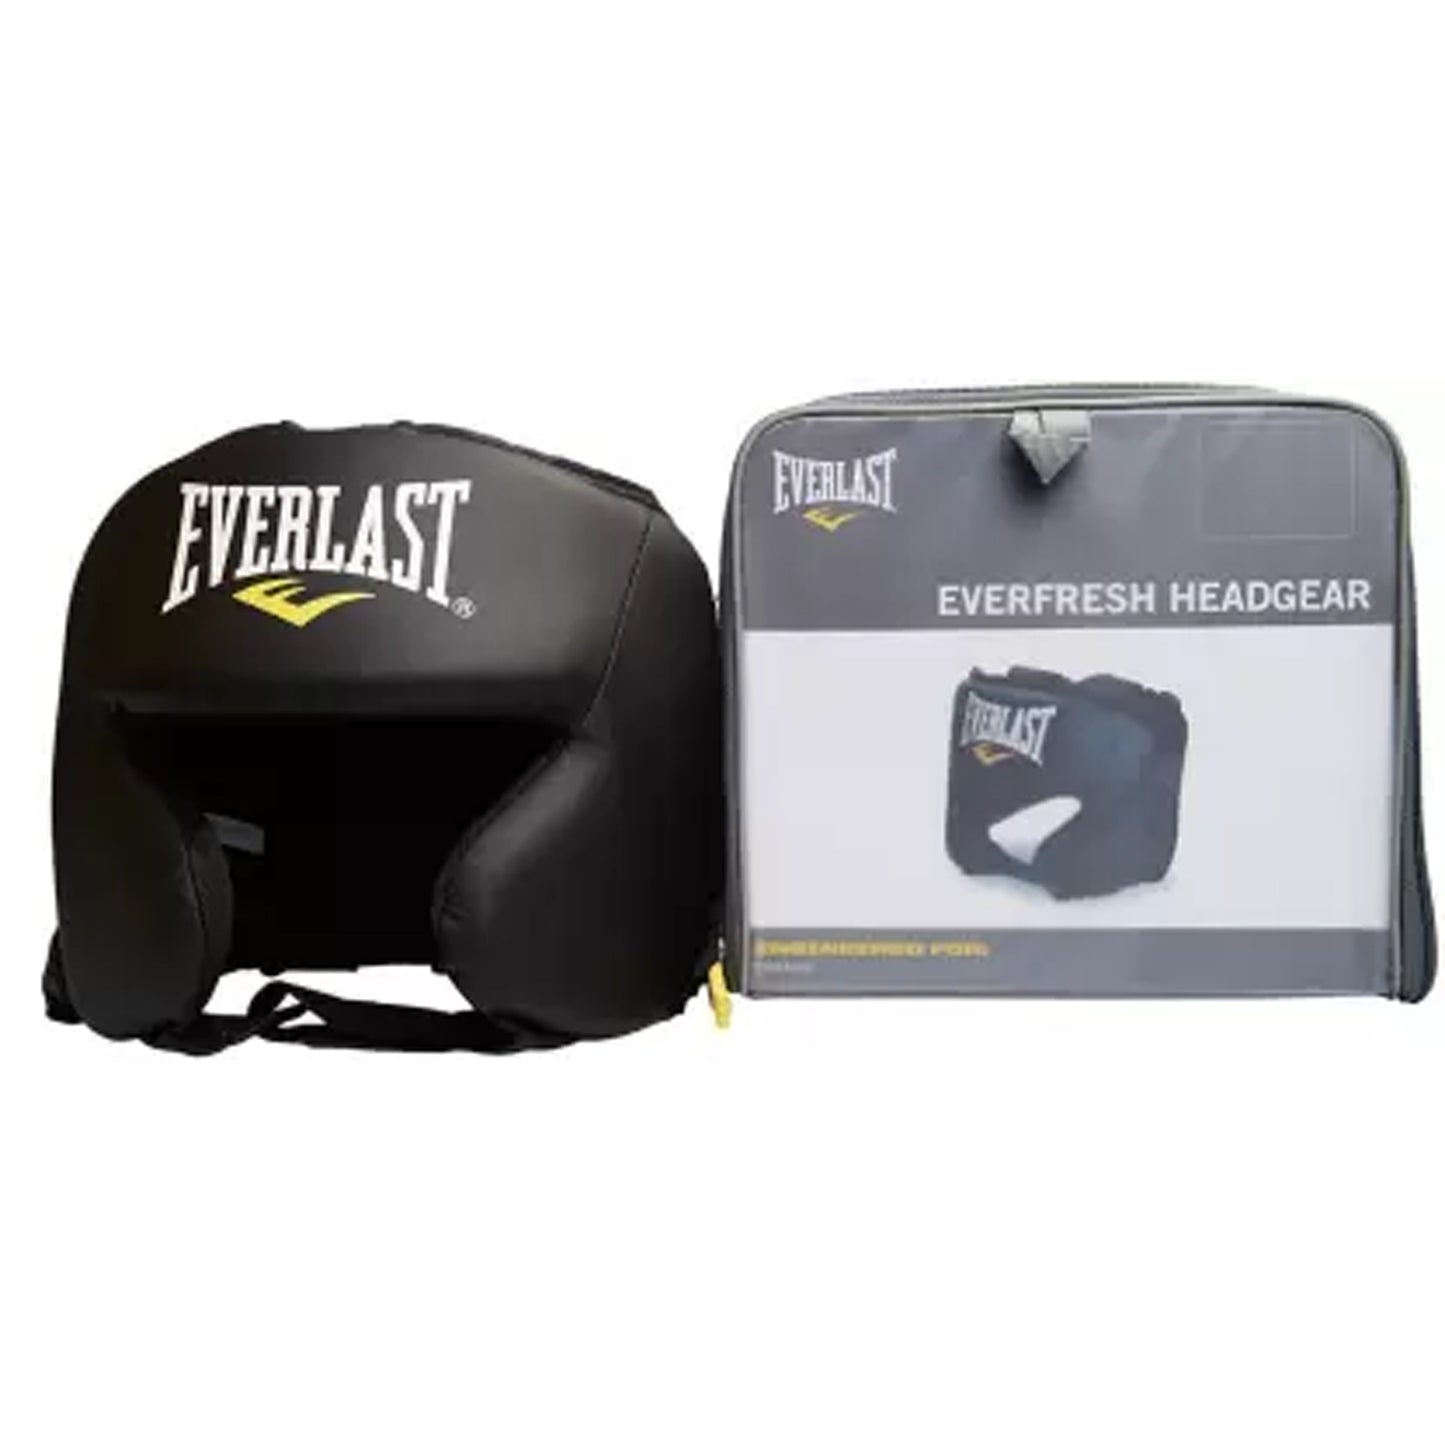 Everlast Boxing Everfresh Headguard 40, Black - Best Price online Prokicksports.com